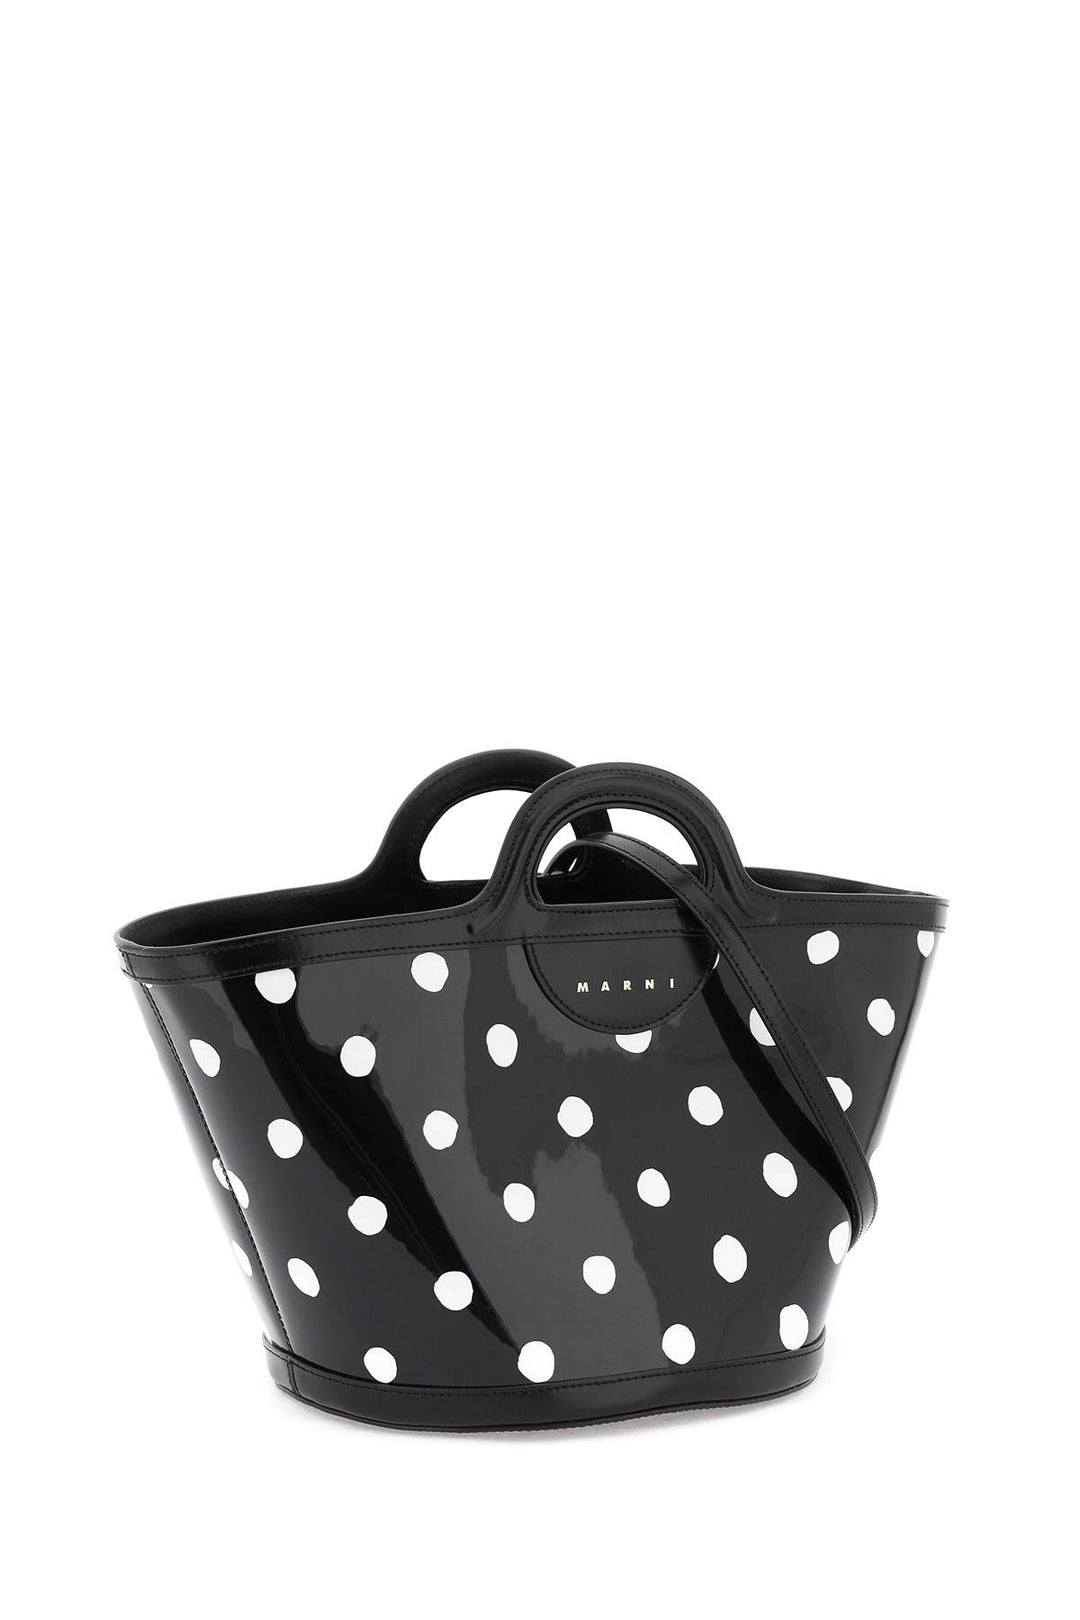 Marni Patent Leather Tropicalia Bucket Bag With Polka Dot Pattern   Nero